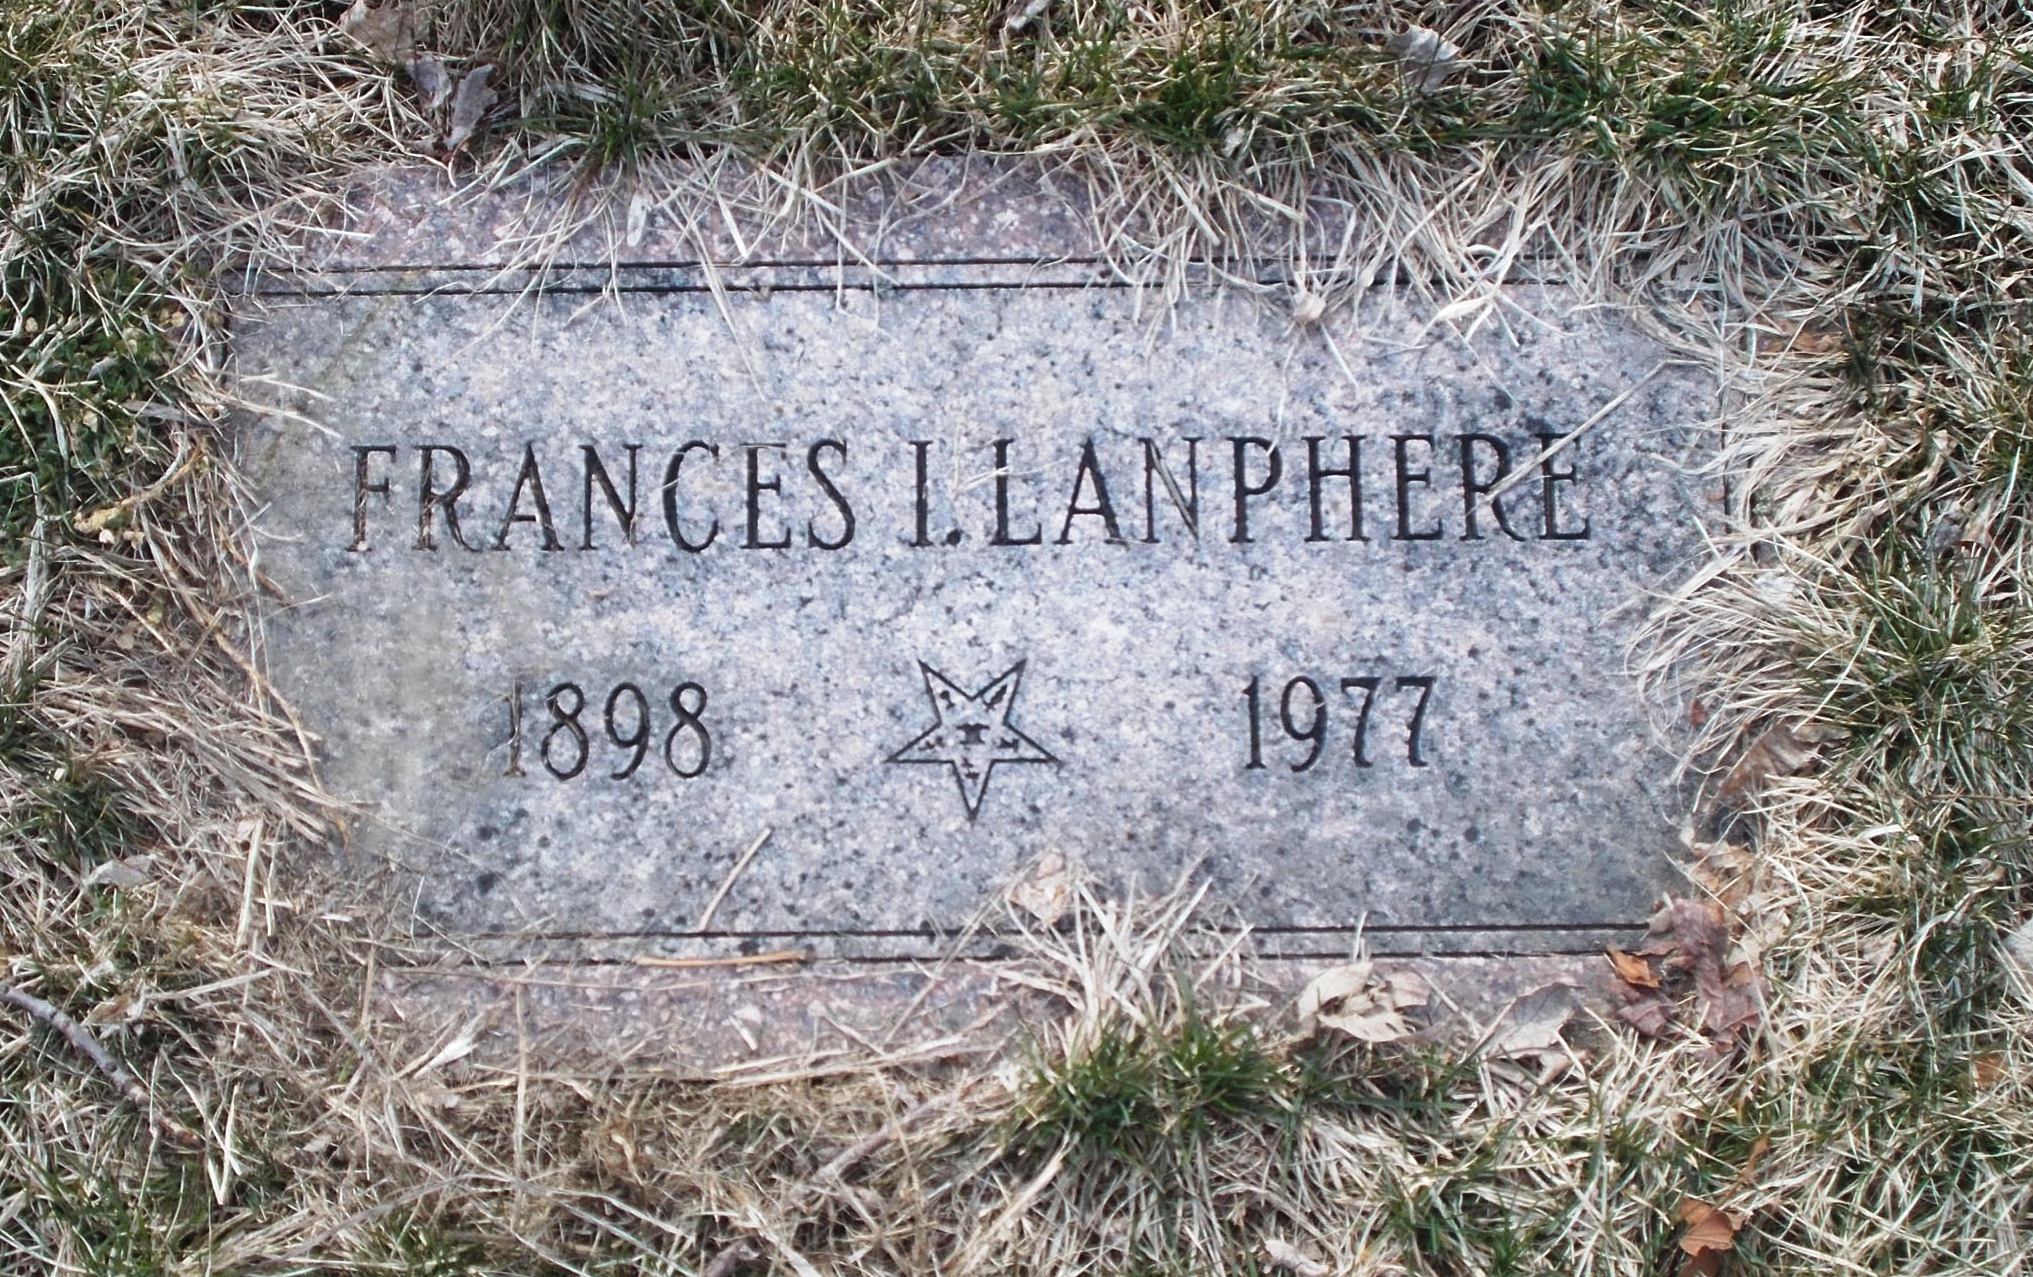 Frances I Lanphere